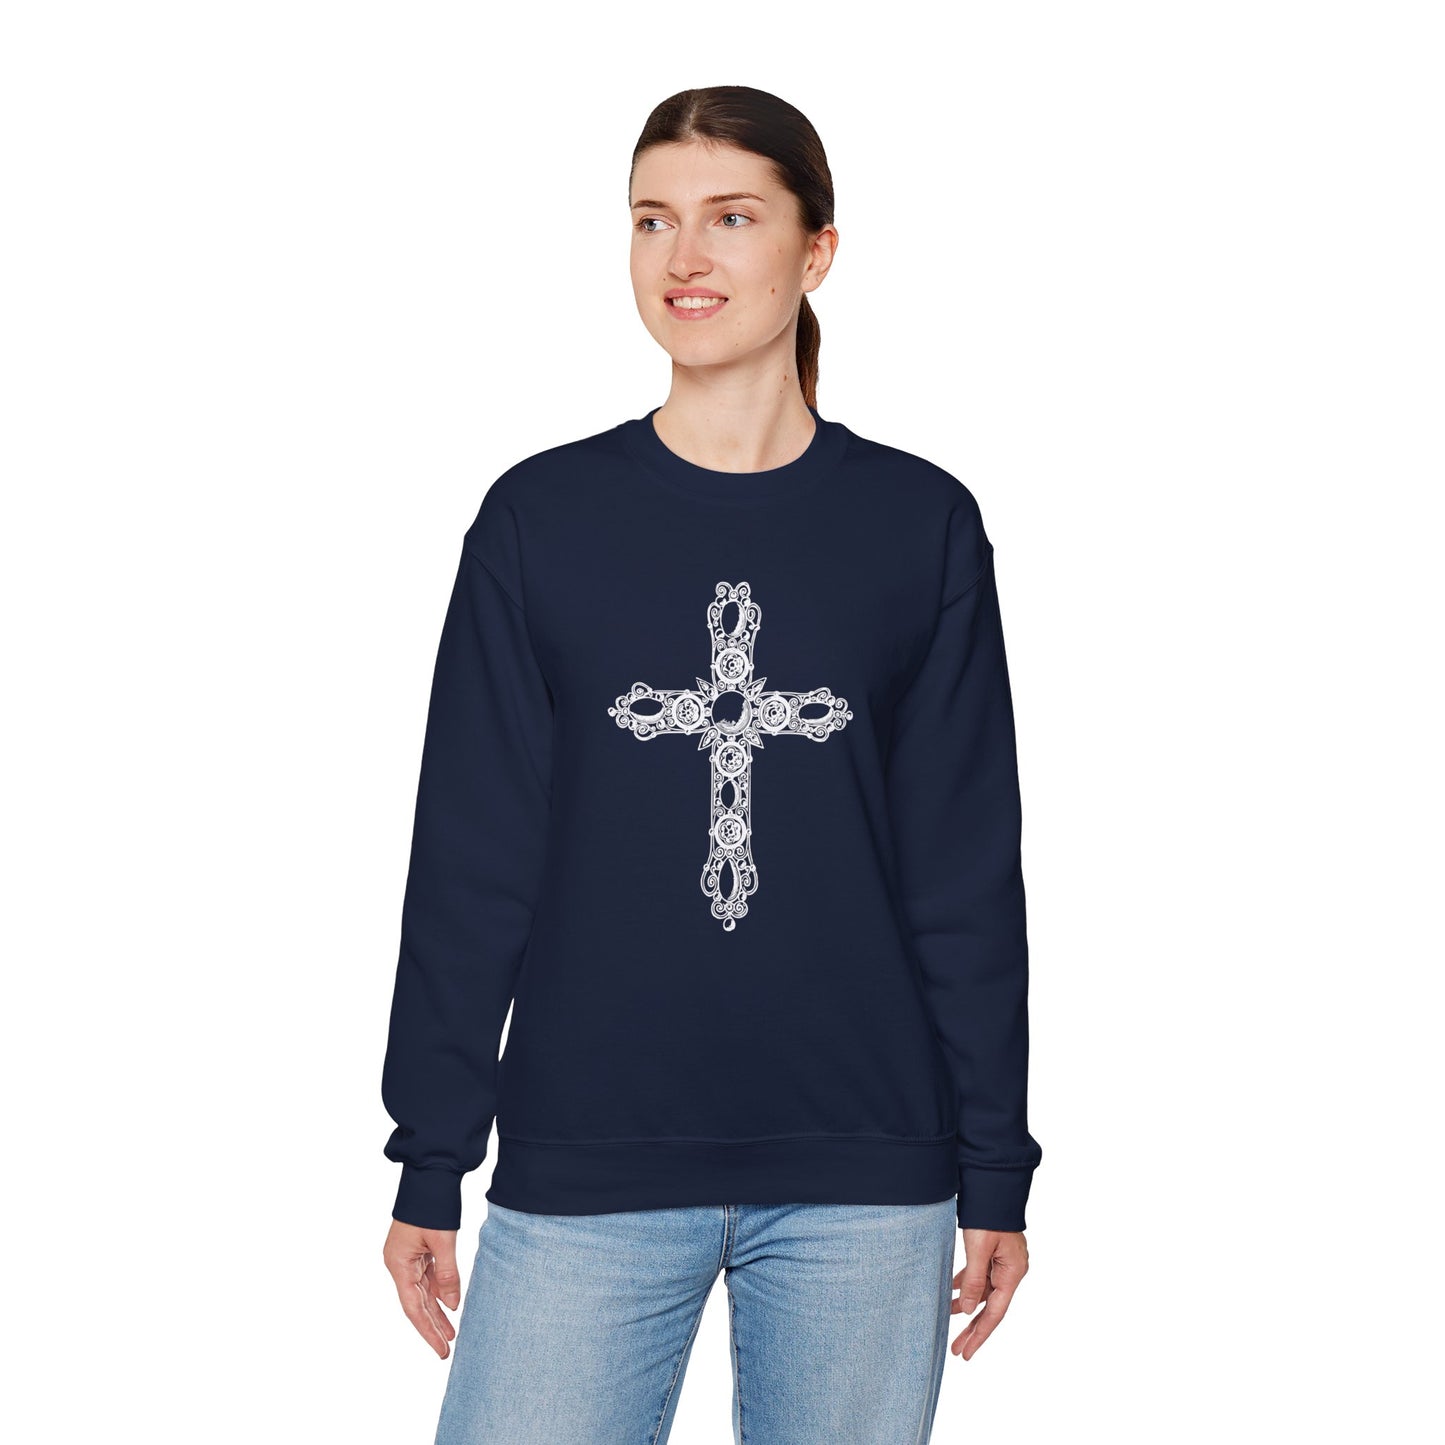 Vintage Cross Sweatshirt